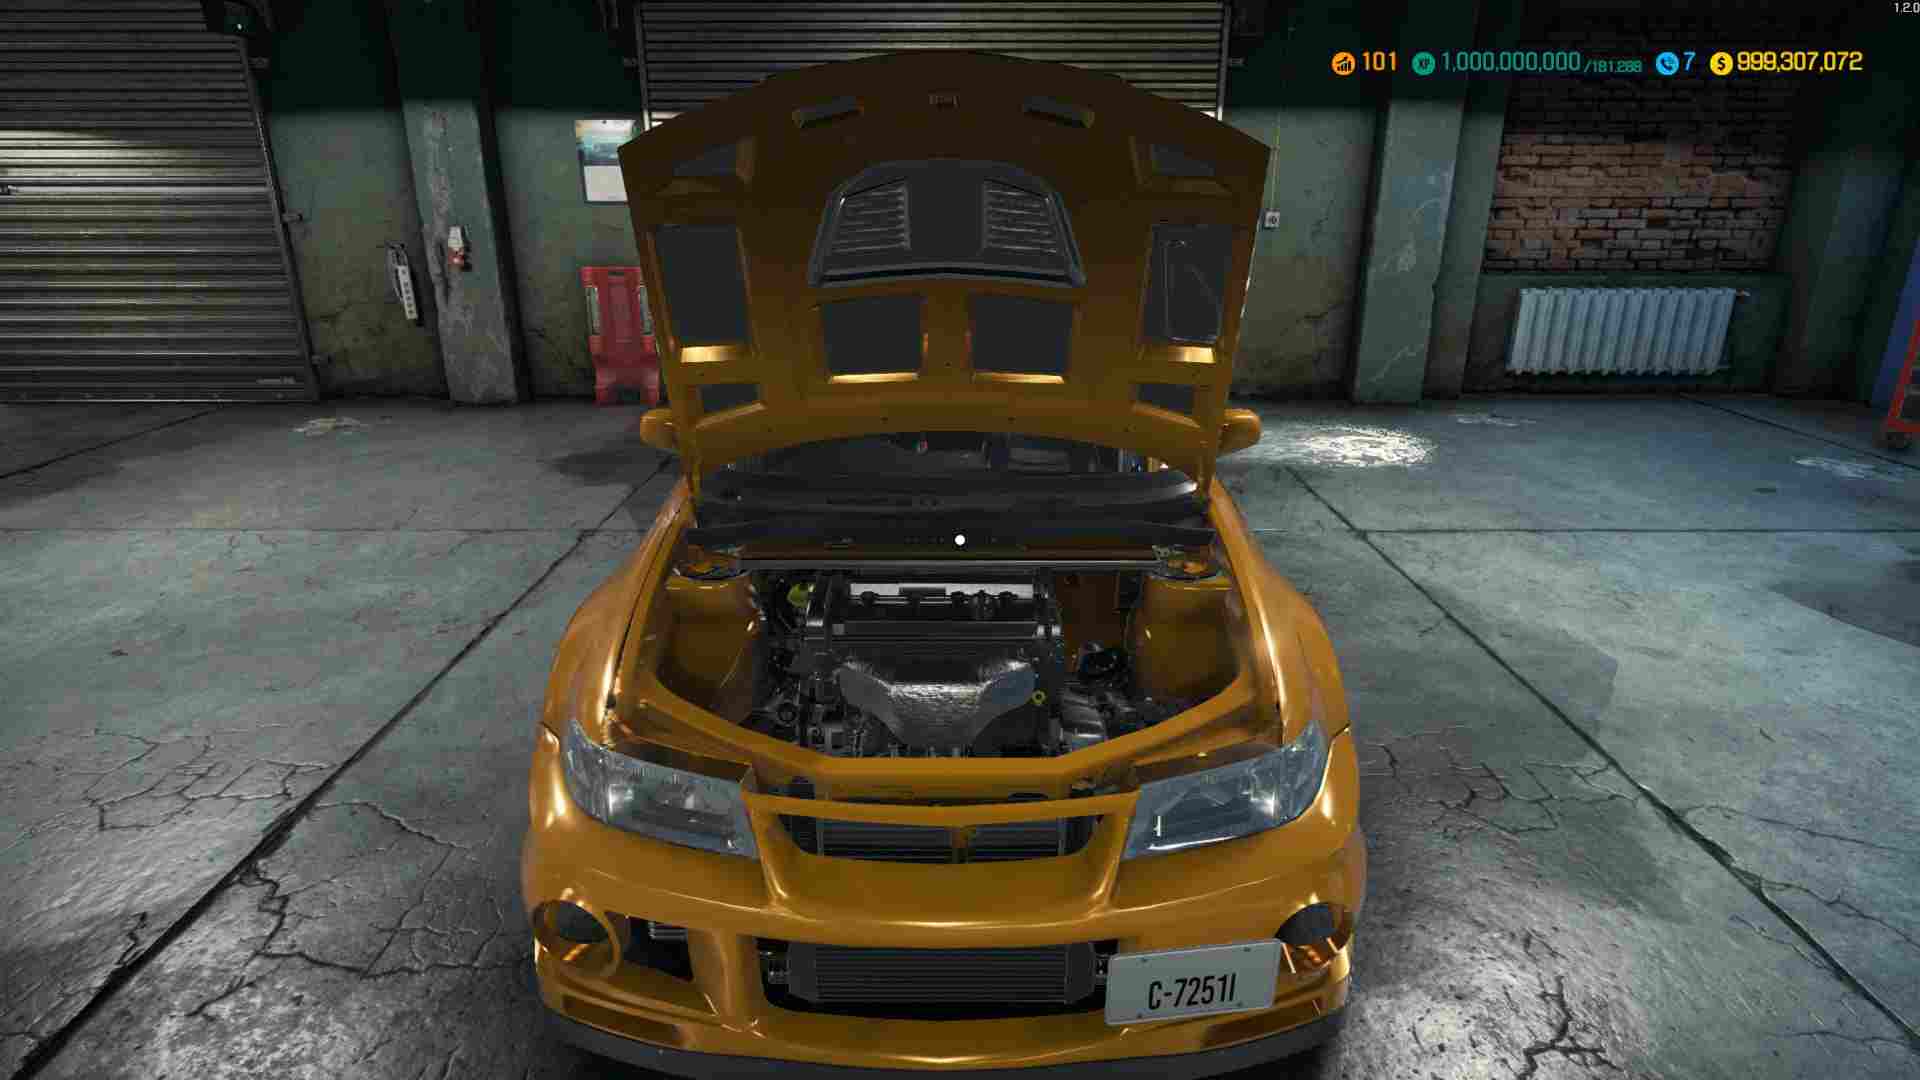 Car Mechanic Simulator mod